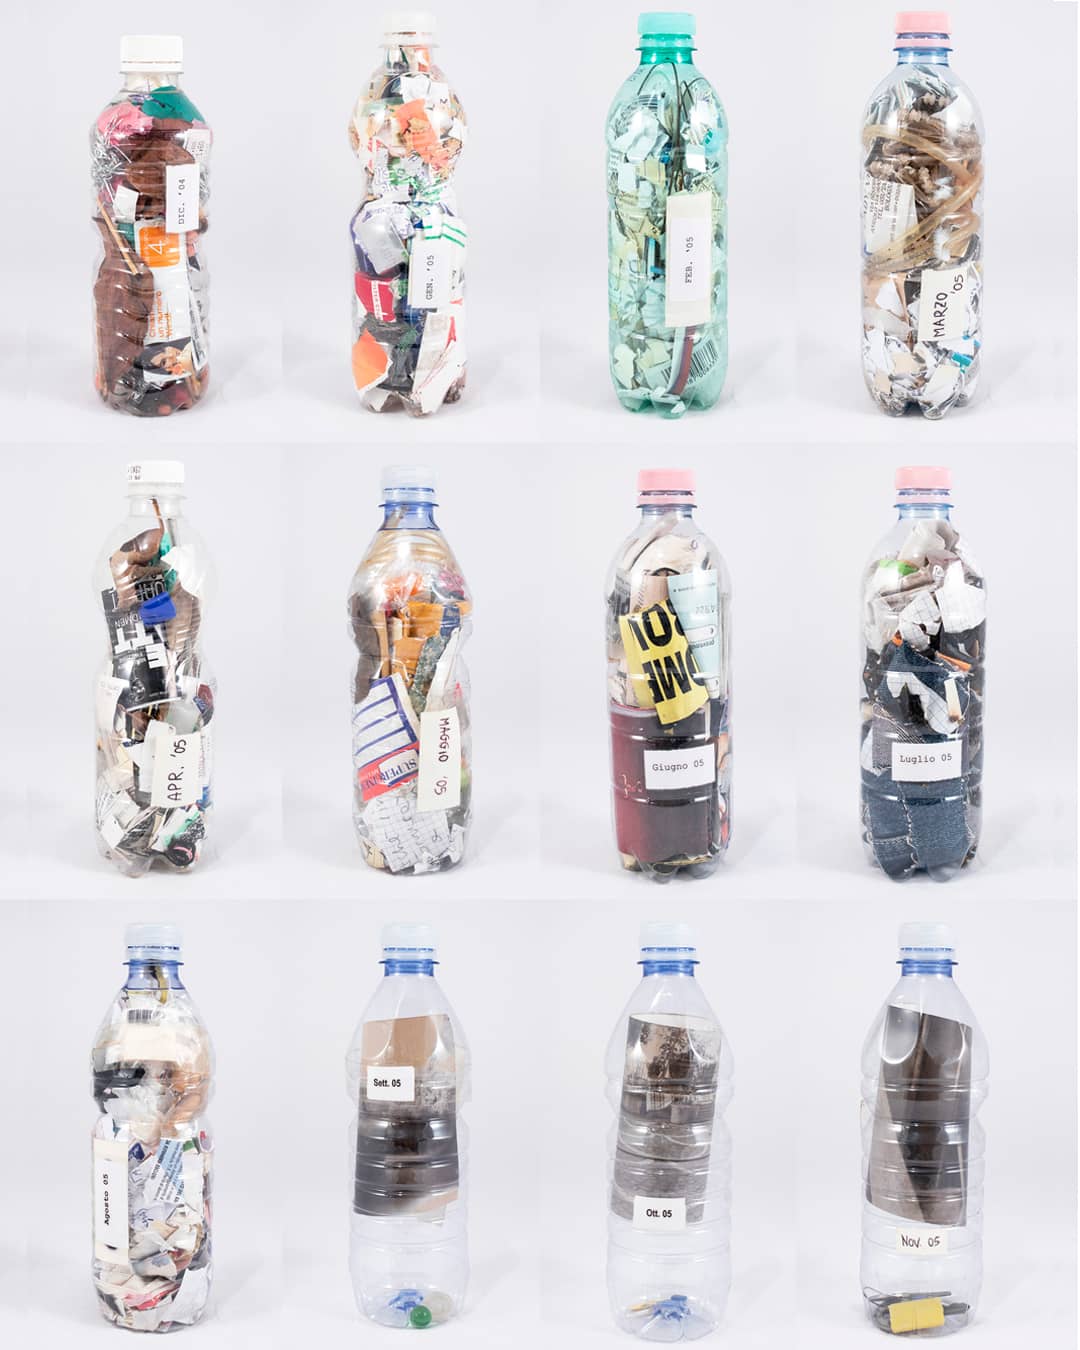 'Today is a lie', mixed media (trash, plastic bottles). Artwork by Francesca Virginia Coppola